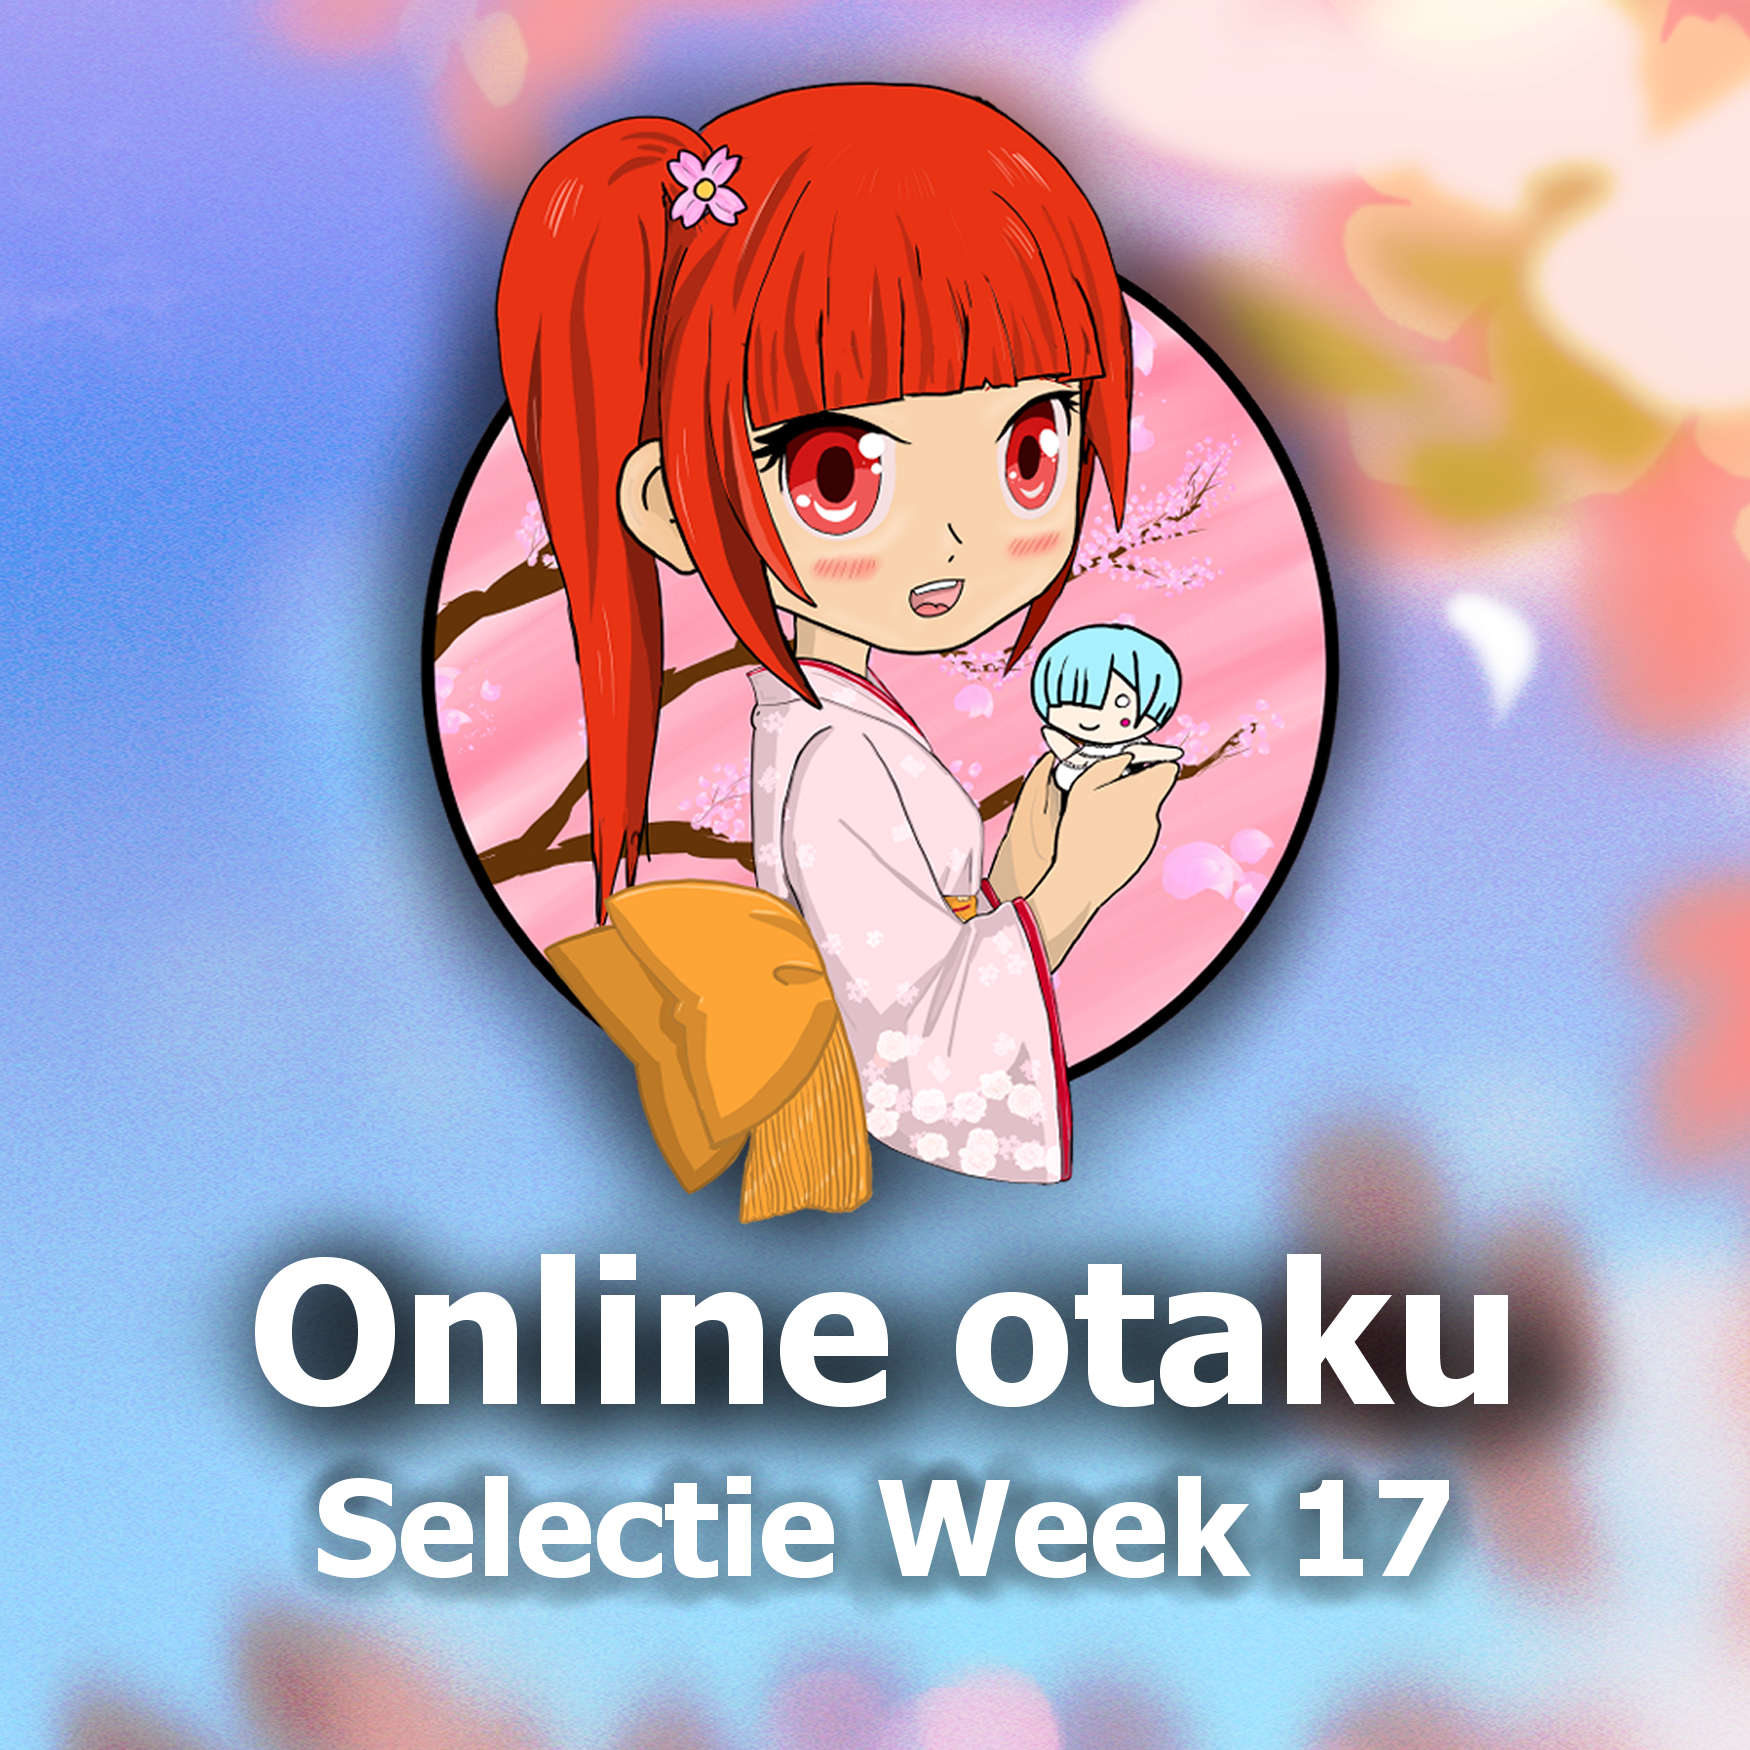 Online otaku Wekelijkse selectie W17